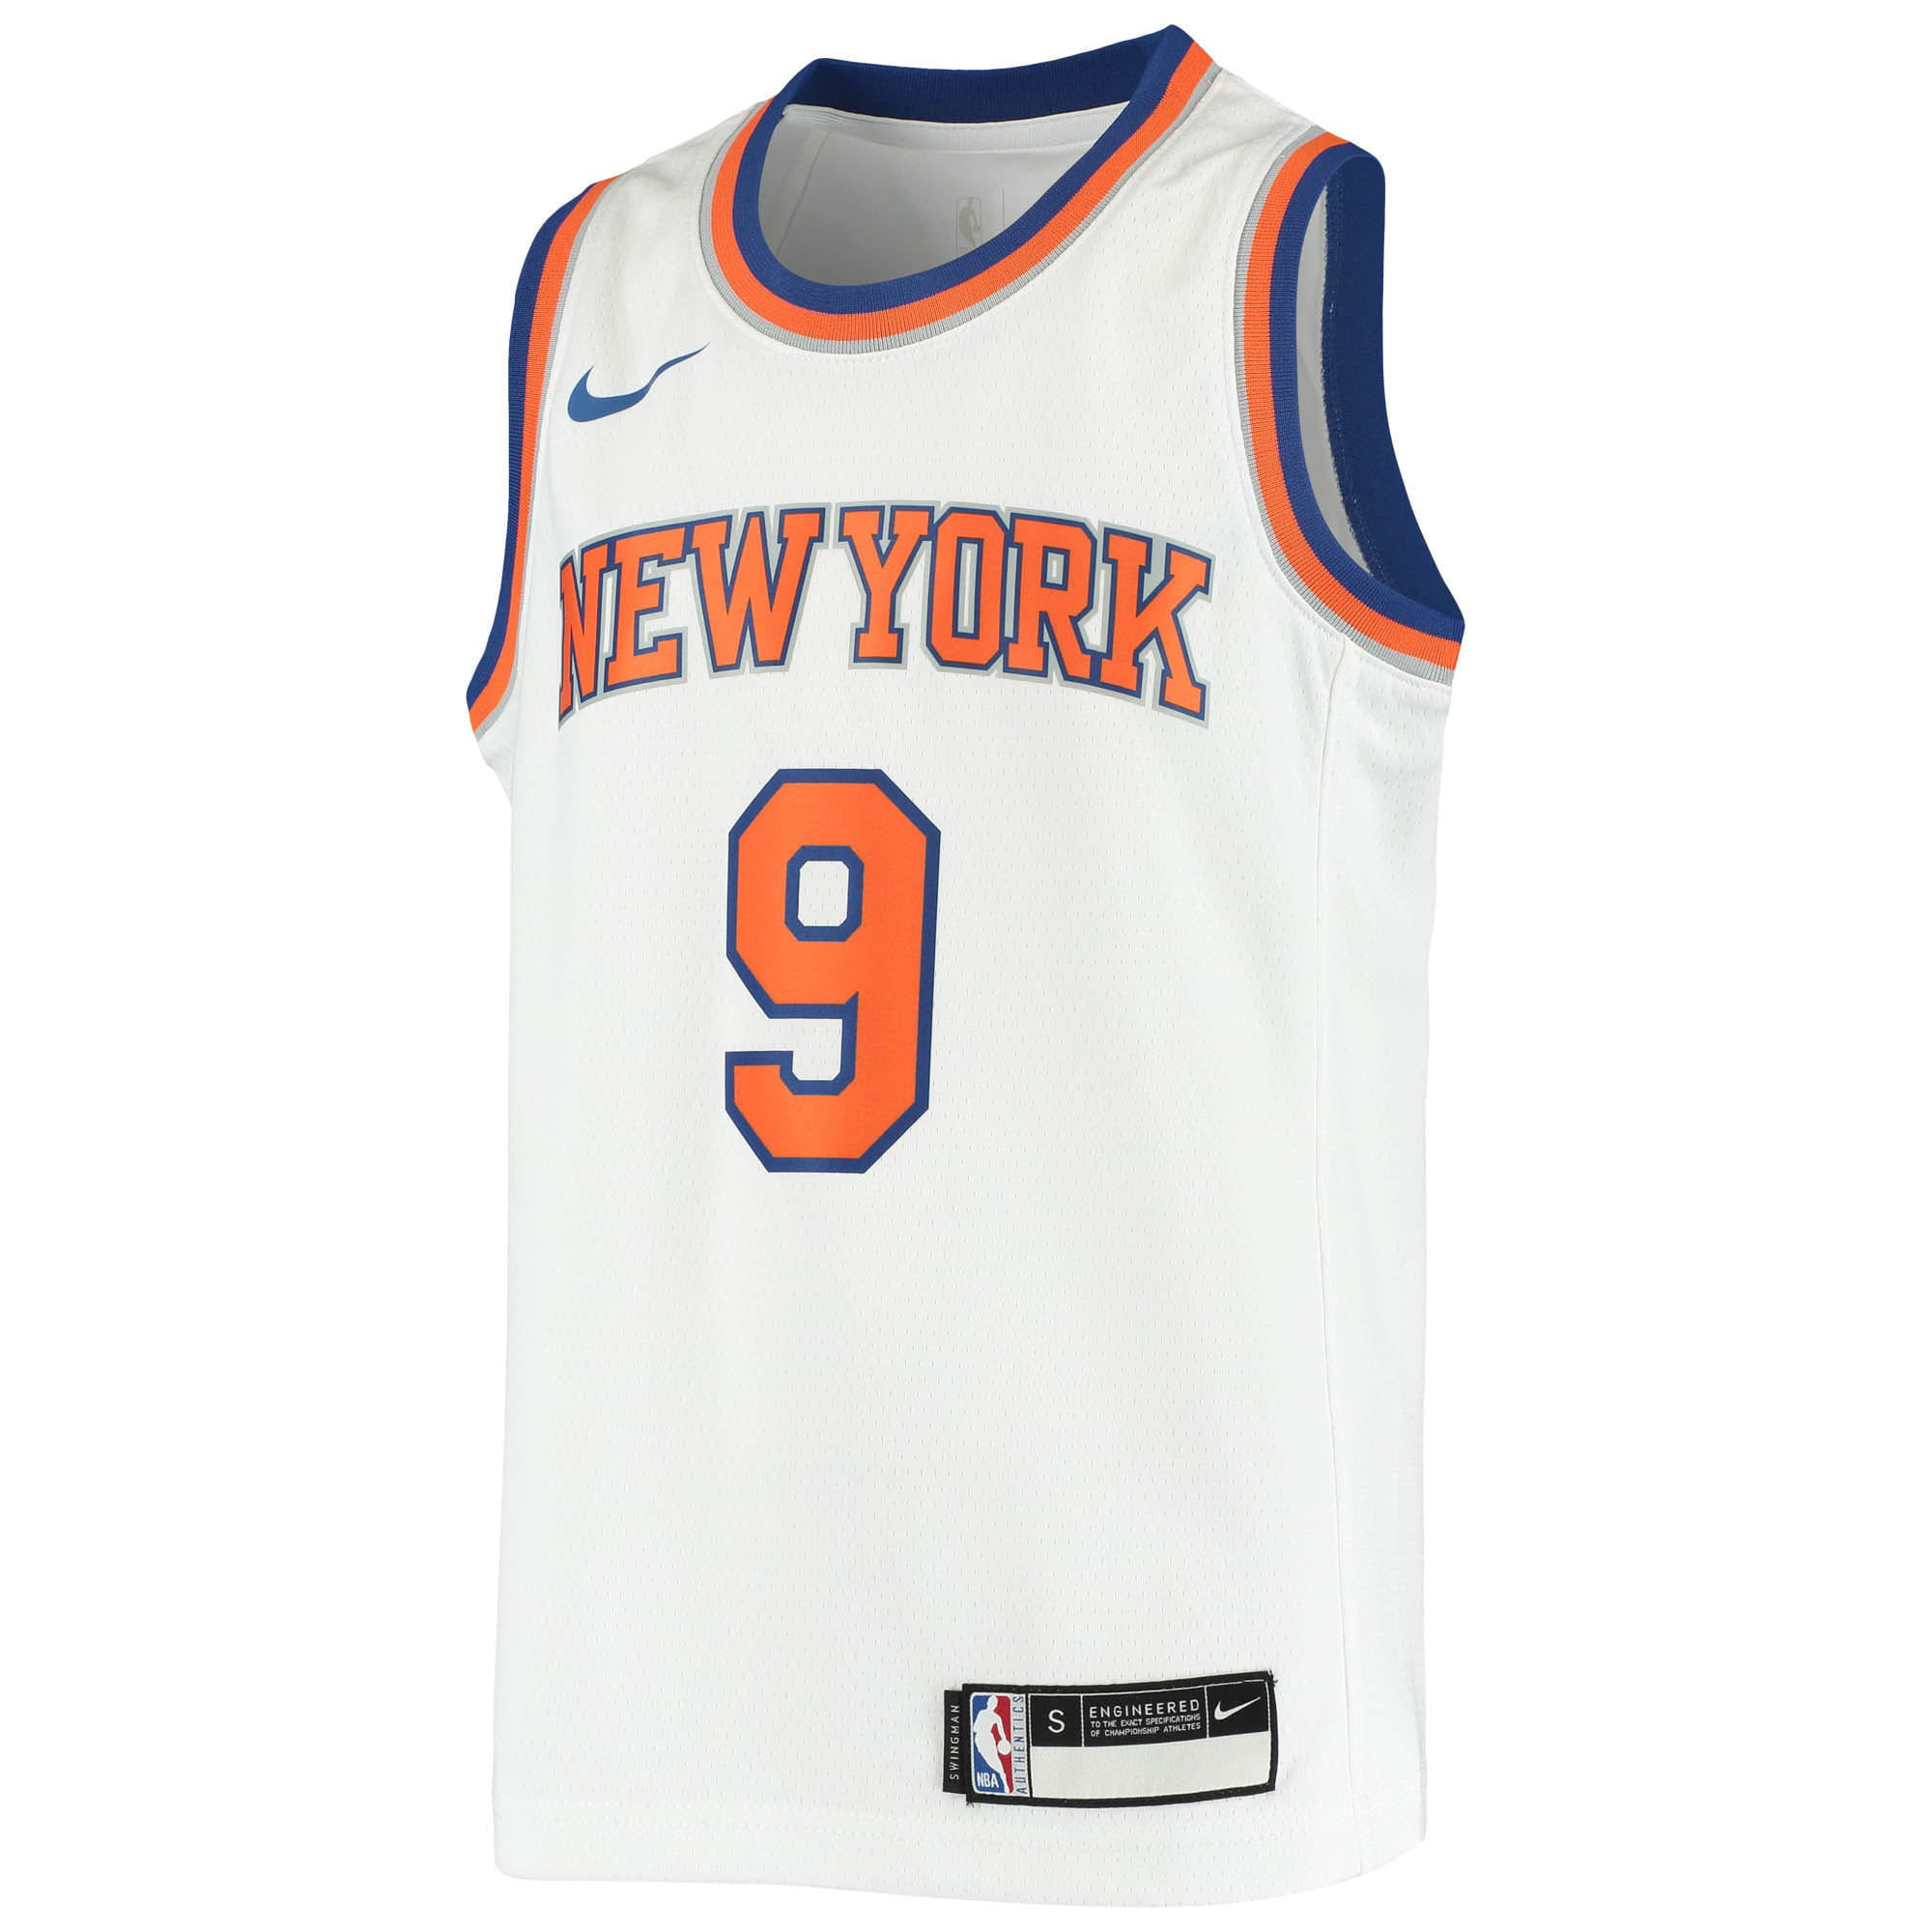 RJ Barrett New York Knicks Autographed White Year 0 Swingman Jersey with 2019 #3 Pick Inscription - Fanatics Authentic Certified